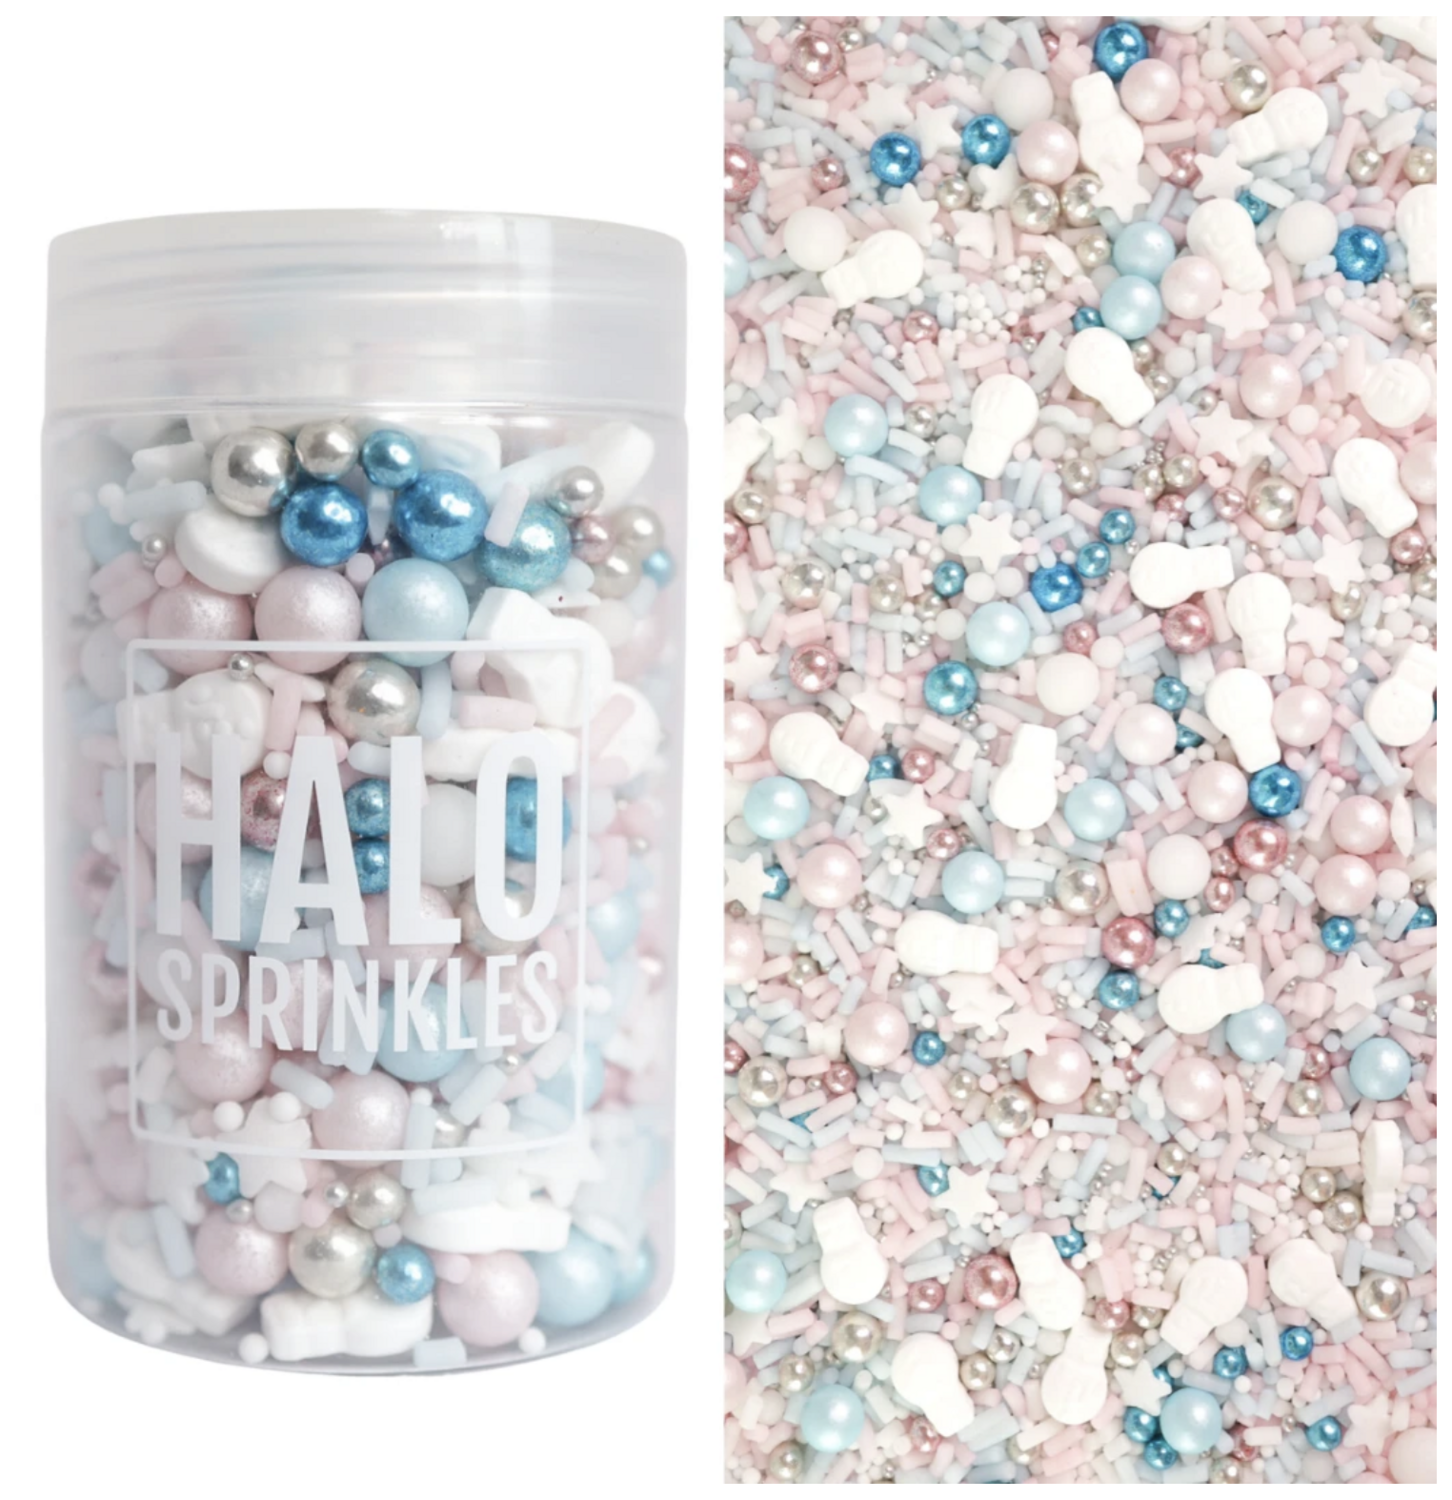 Halo Sprinkles MIX -WINTER WONDERLAND 125γρ  - Μείγμα Ζαχαρωτών Χριστουγεννιάτικο Λευκό με Μεταλλικές Ροζ και Γαλάζιες Αποχρώσεις με Λευκά Χιονανθρωπάκια